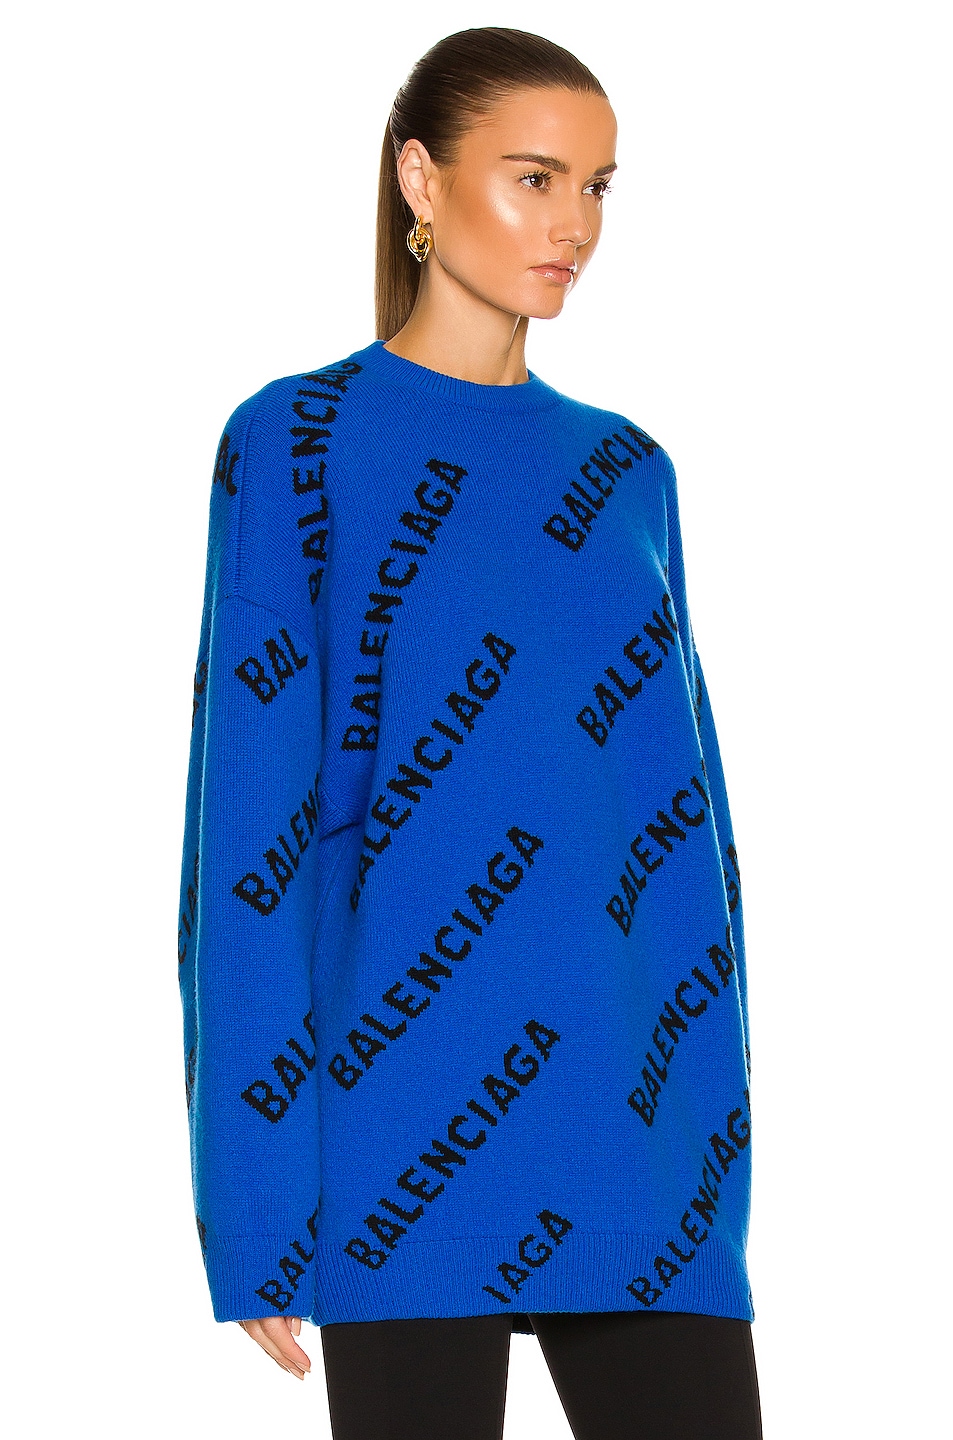 Balenciaga All Over Logo Crewneck Sweater in Blue & Black | FWRD